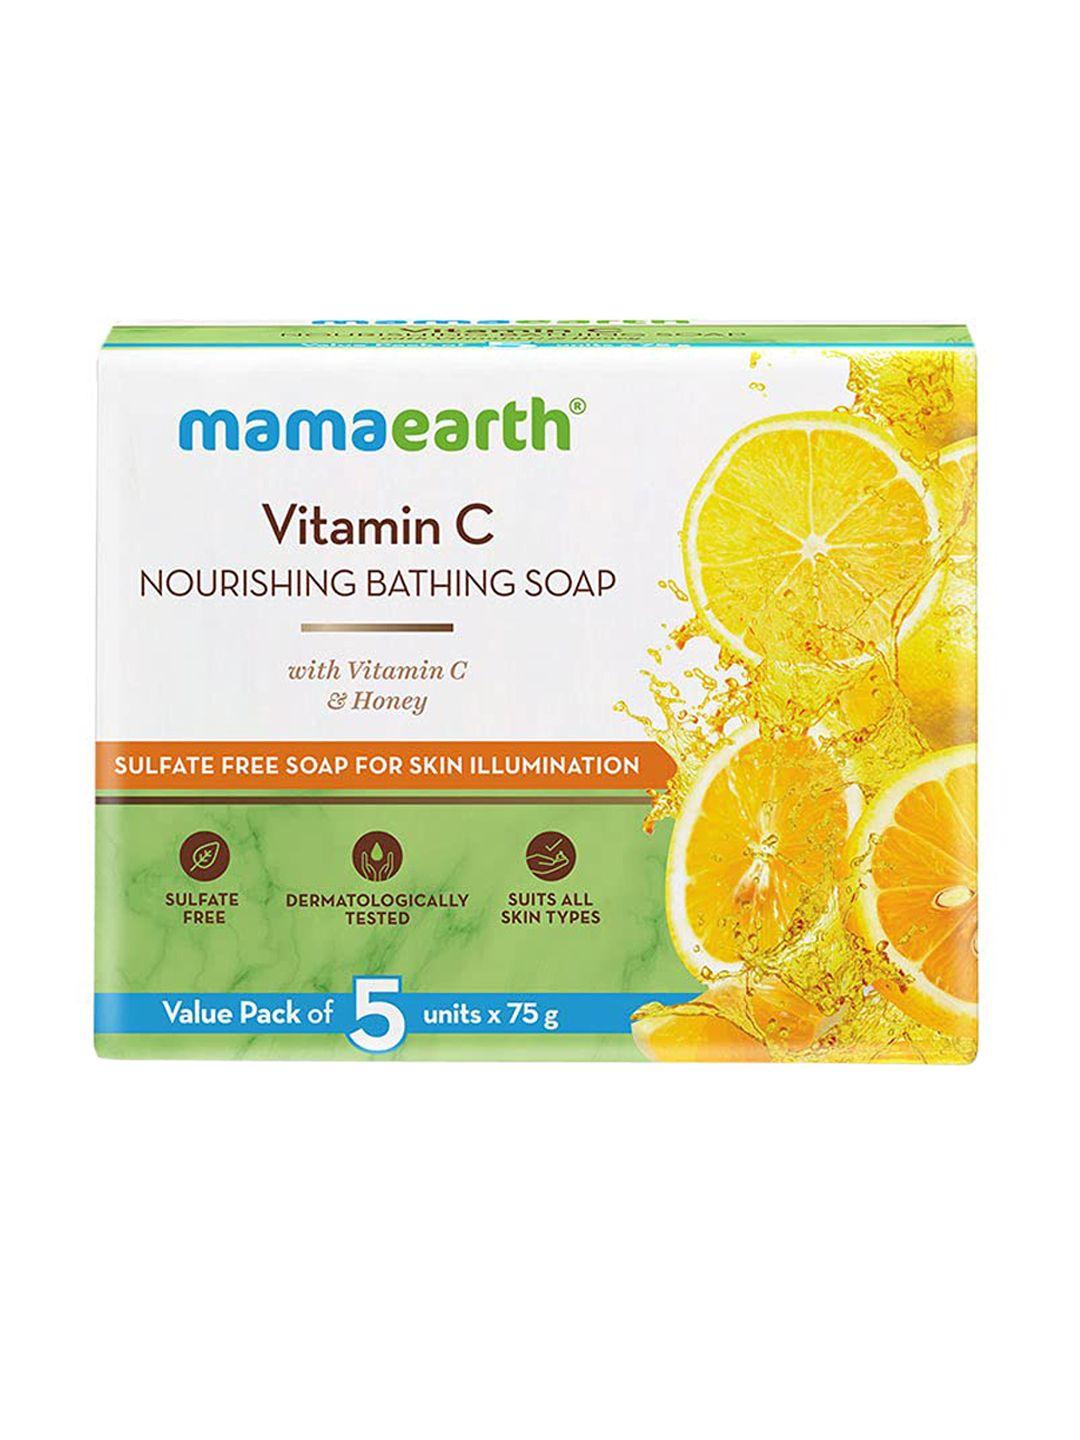 mamaearth set of 5 vitamin c nourishing bathing soap with honey for skin illumination 75 g